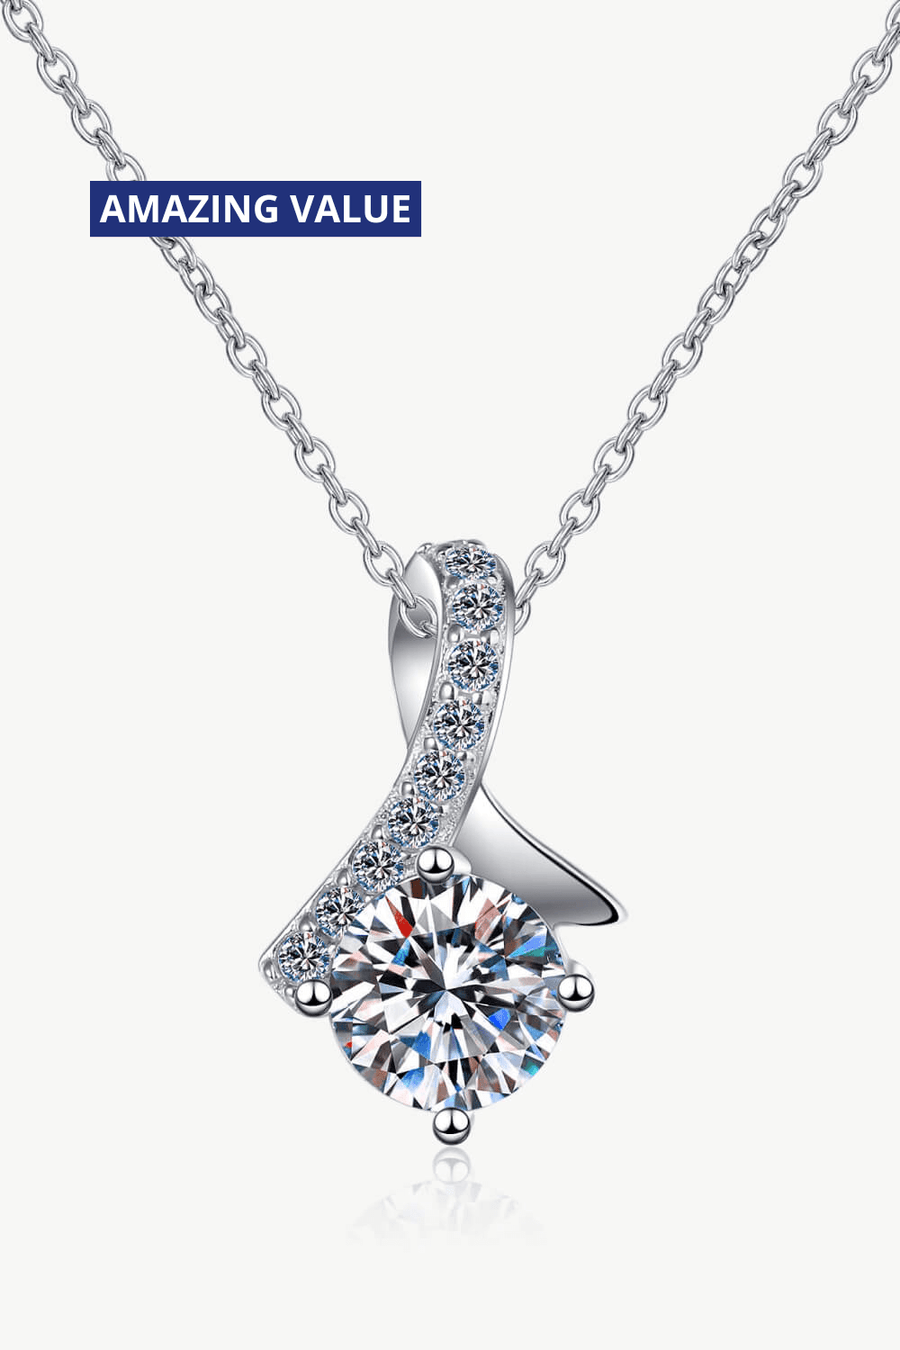 1# BEST Diamond Pendant Necklace Jewelry Gifts for Women | #1 Best Most Top Trendy Trending 1 Carat Diamond Pendant Necklace - Unique and Chic | MASON New York